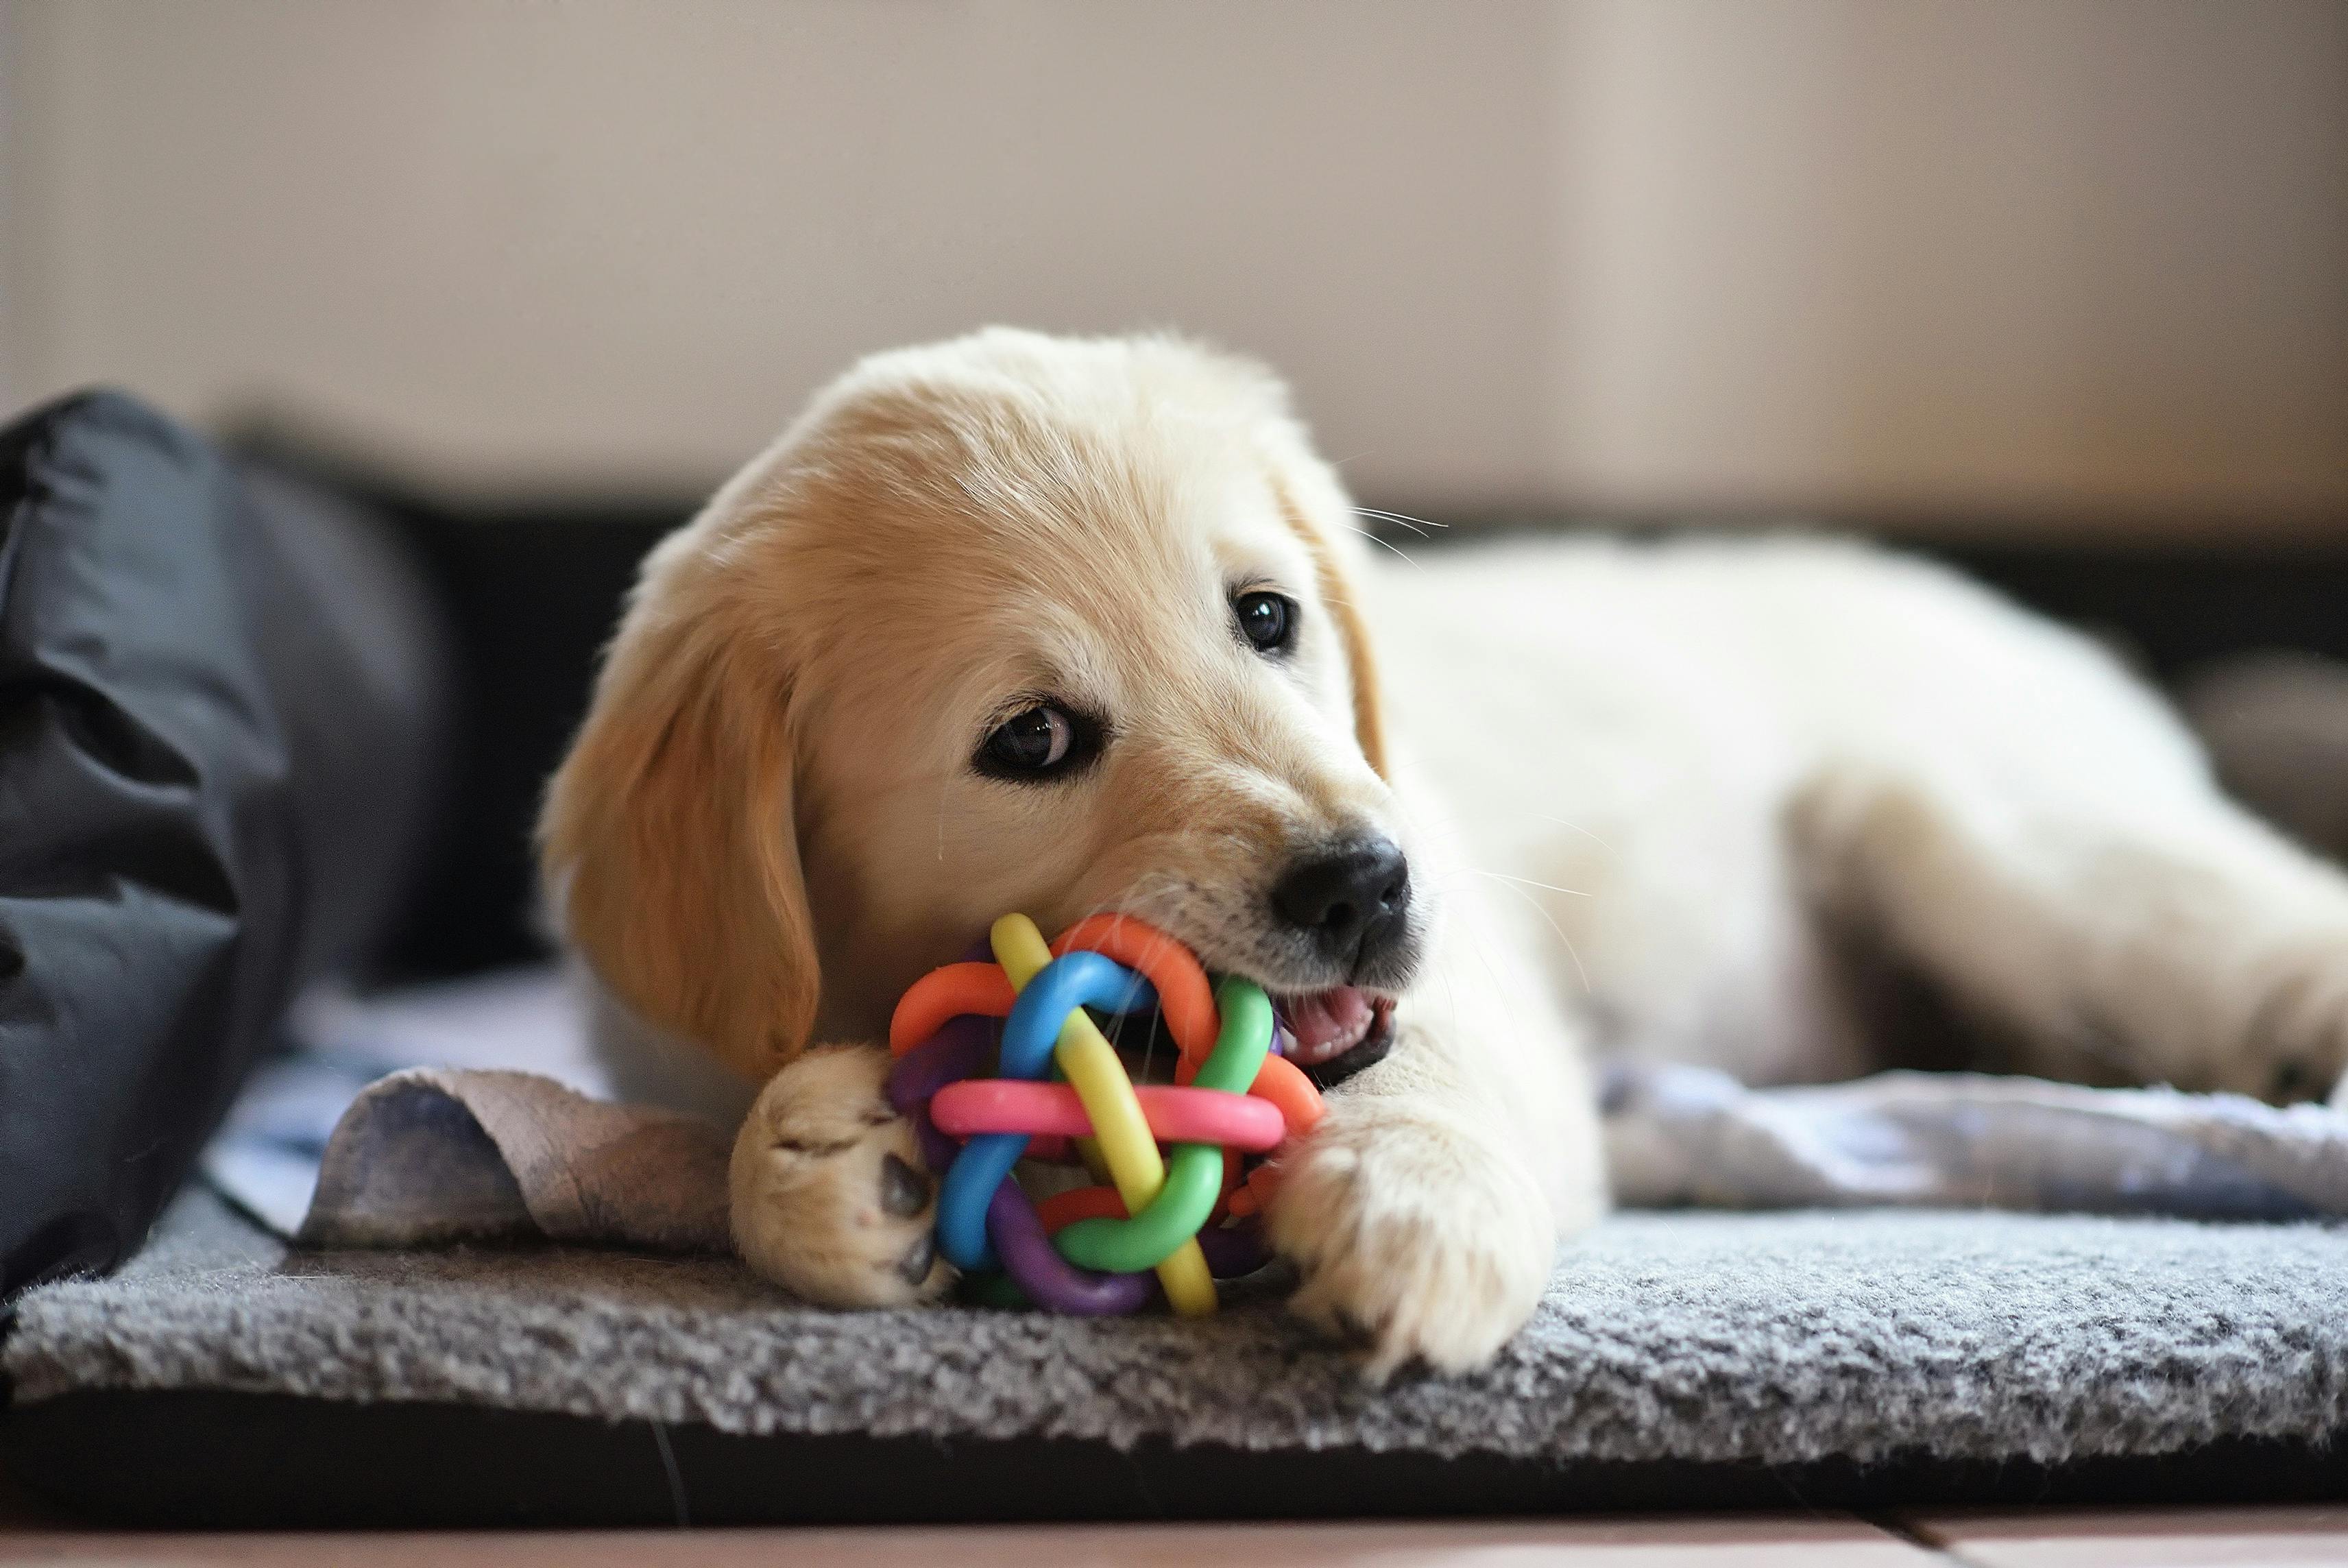 DIY: 9 Neat Ideas to Turn Your Dog's Dog Treats into Toys